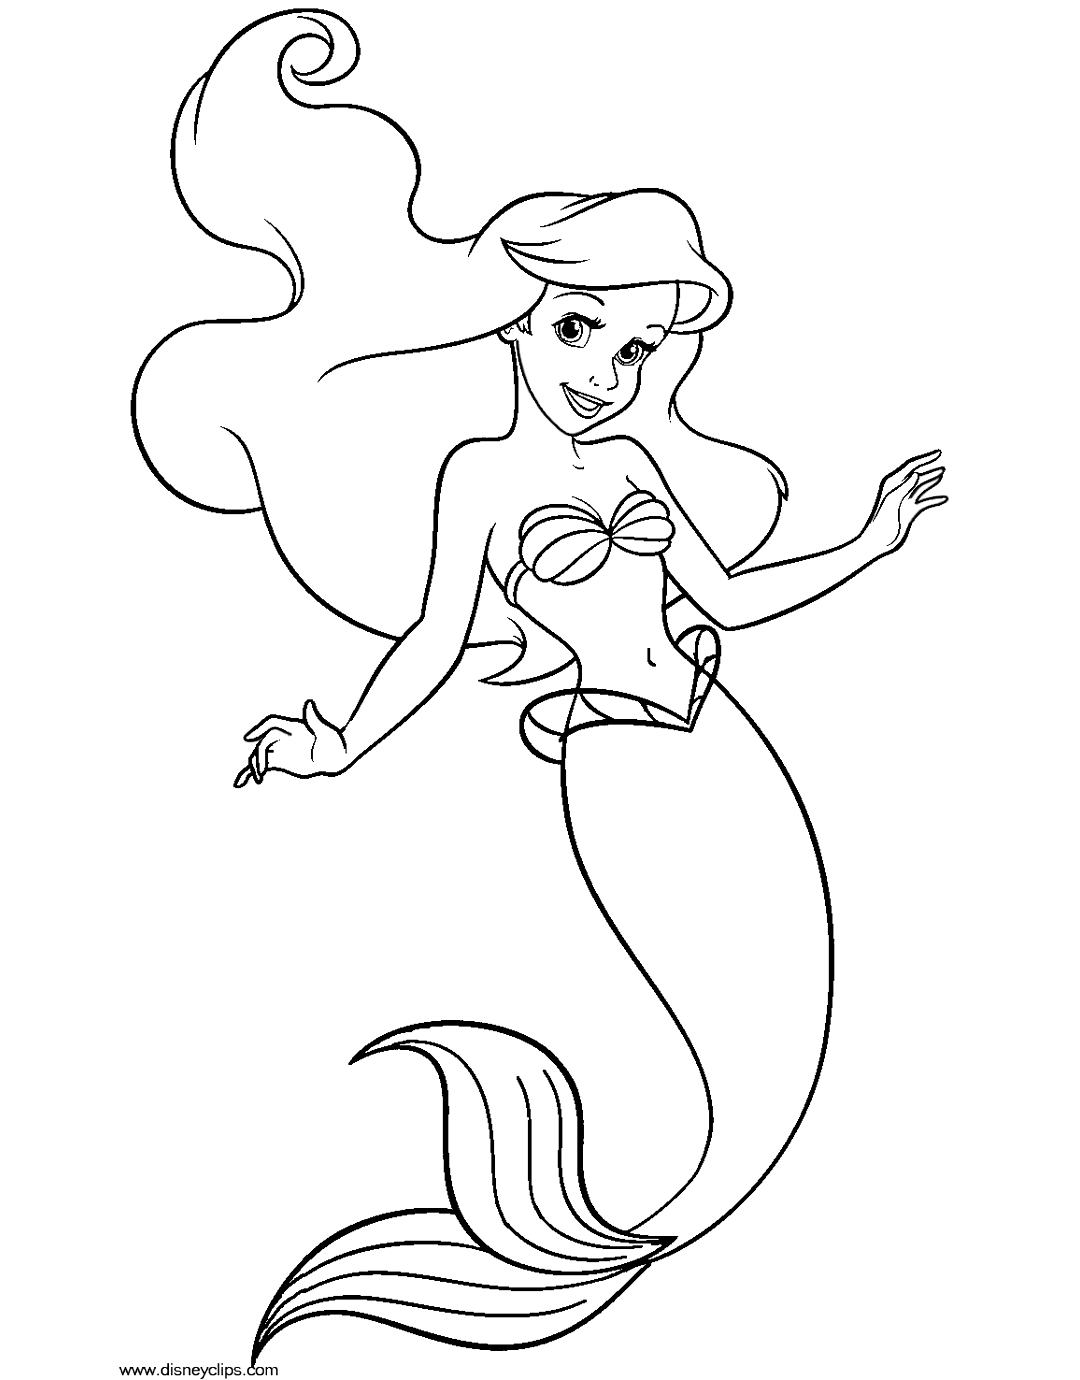 Goodly Princess Ariel Coloring Pages   Ariel Coloring Pages ...